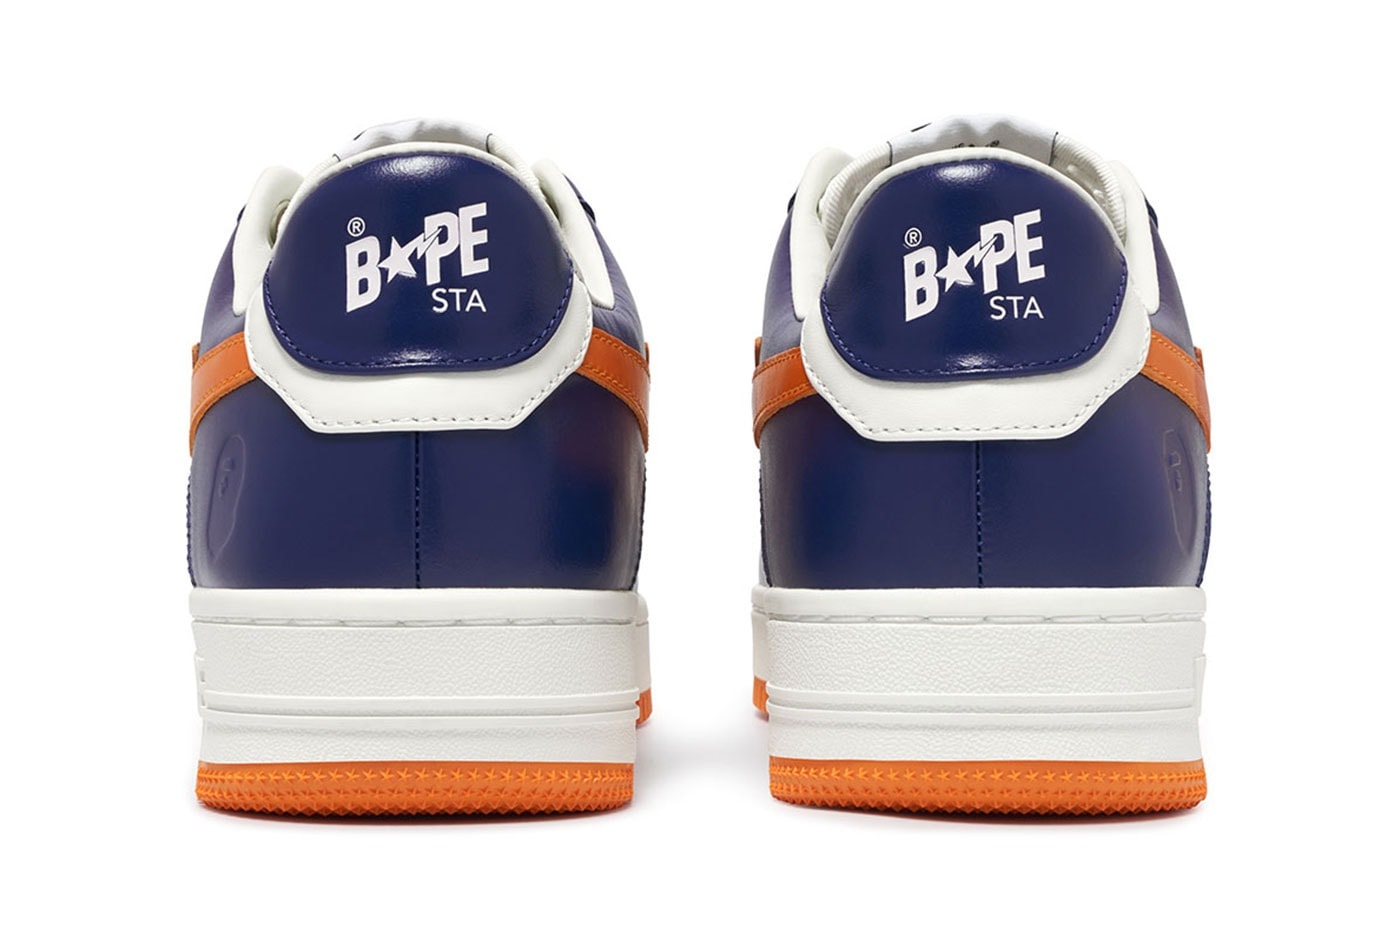 A BATHING APE 正式推出全新 BAPE STA Family Pack 系列鞋款